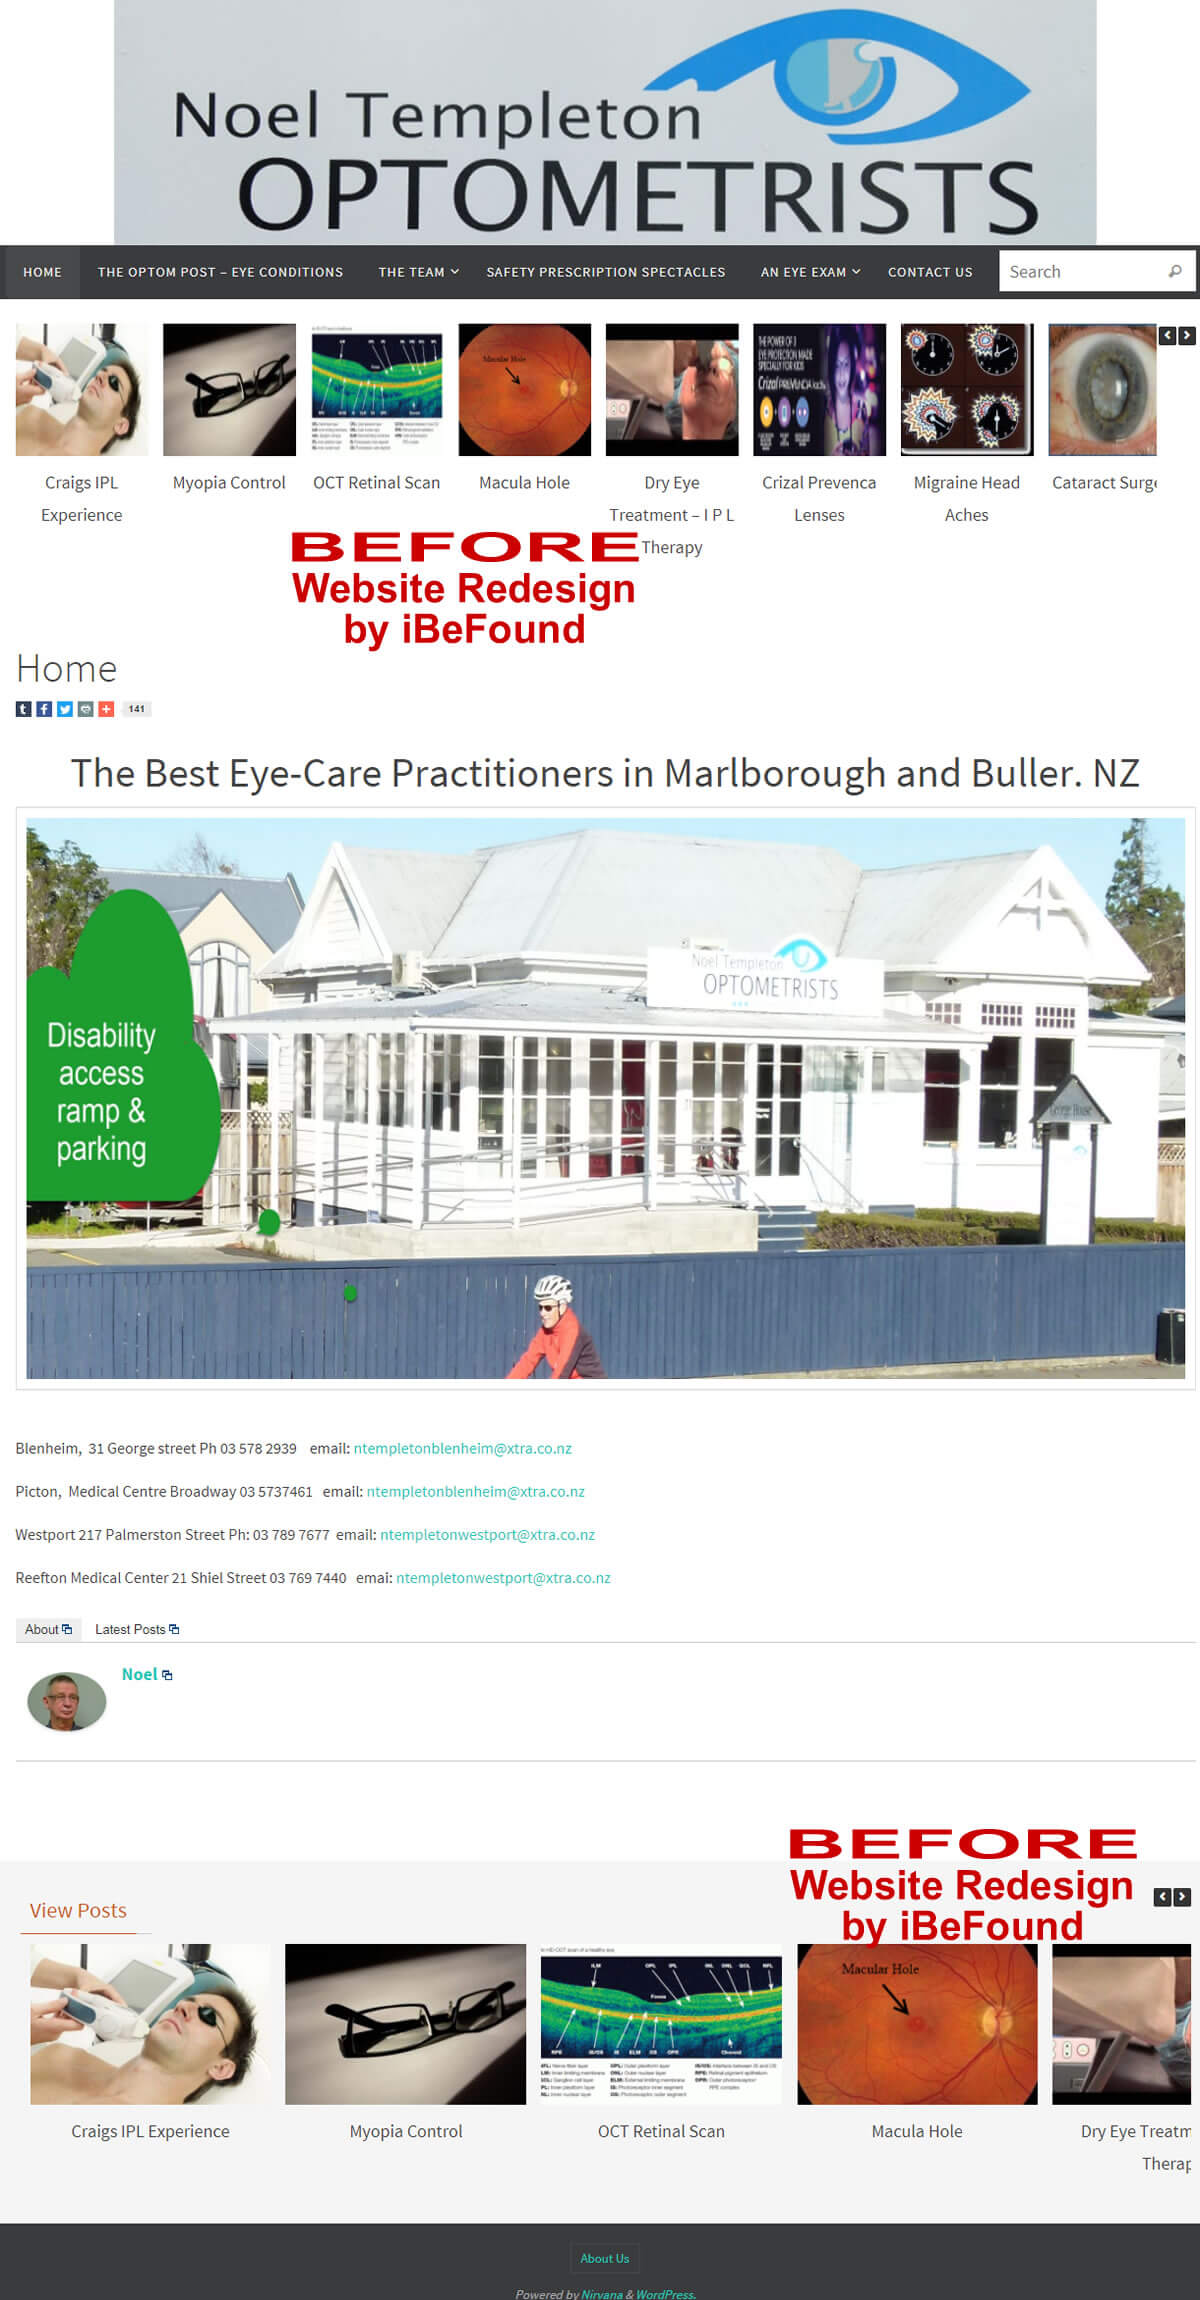 Homepage Of Noel Templeton Optometrists Before Website Redesign By IBeFound